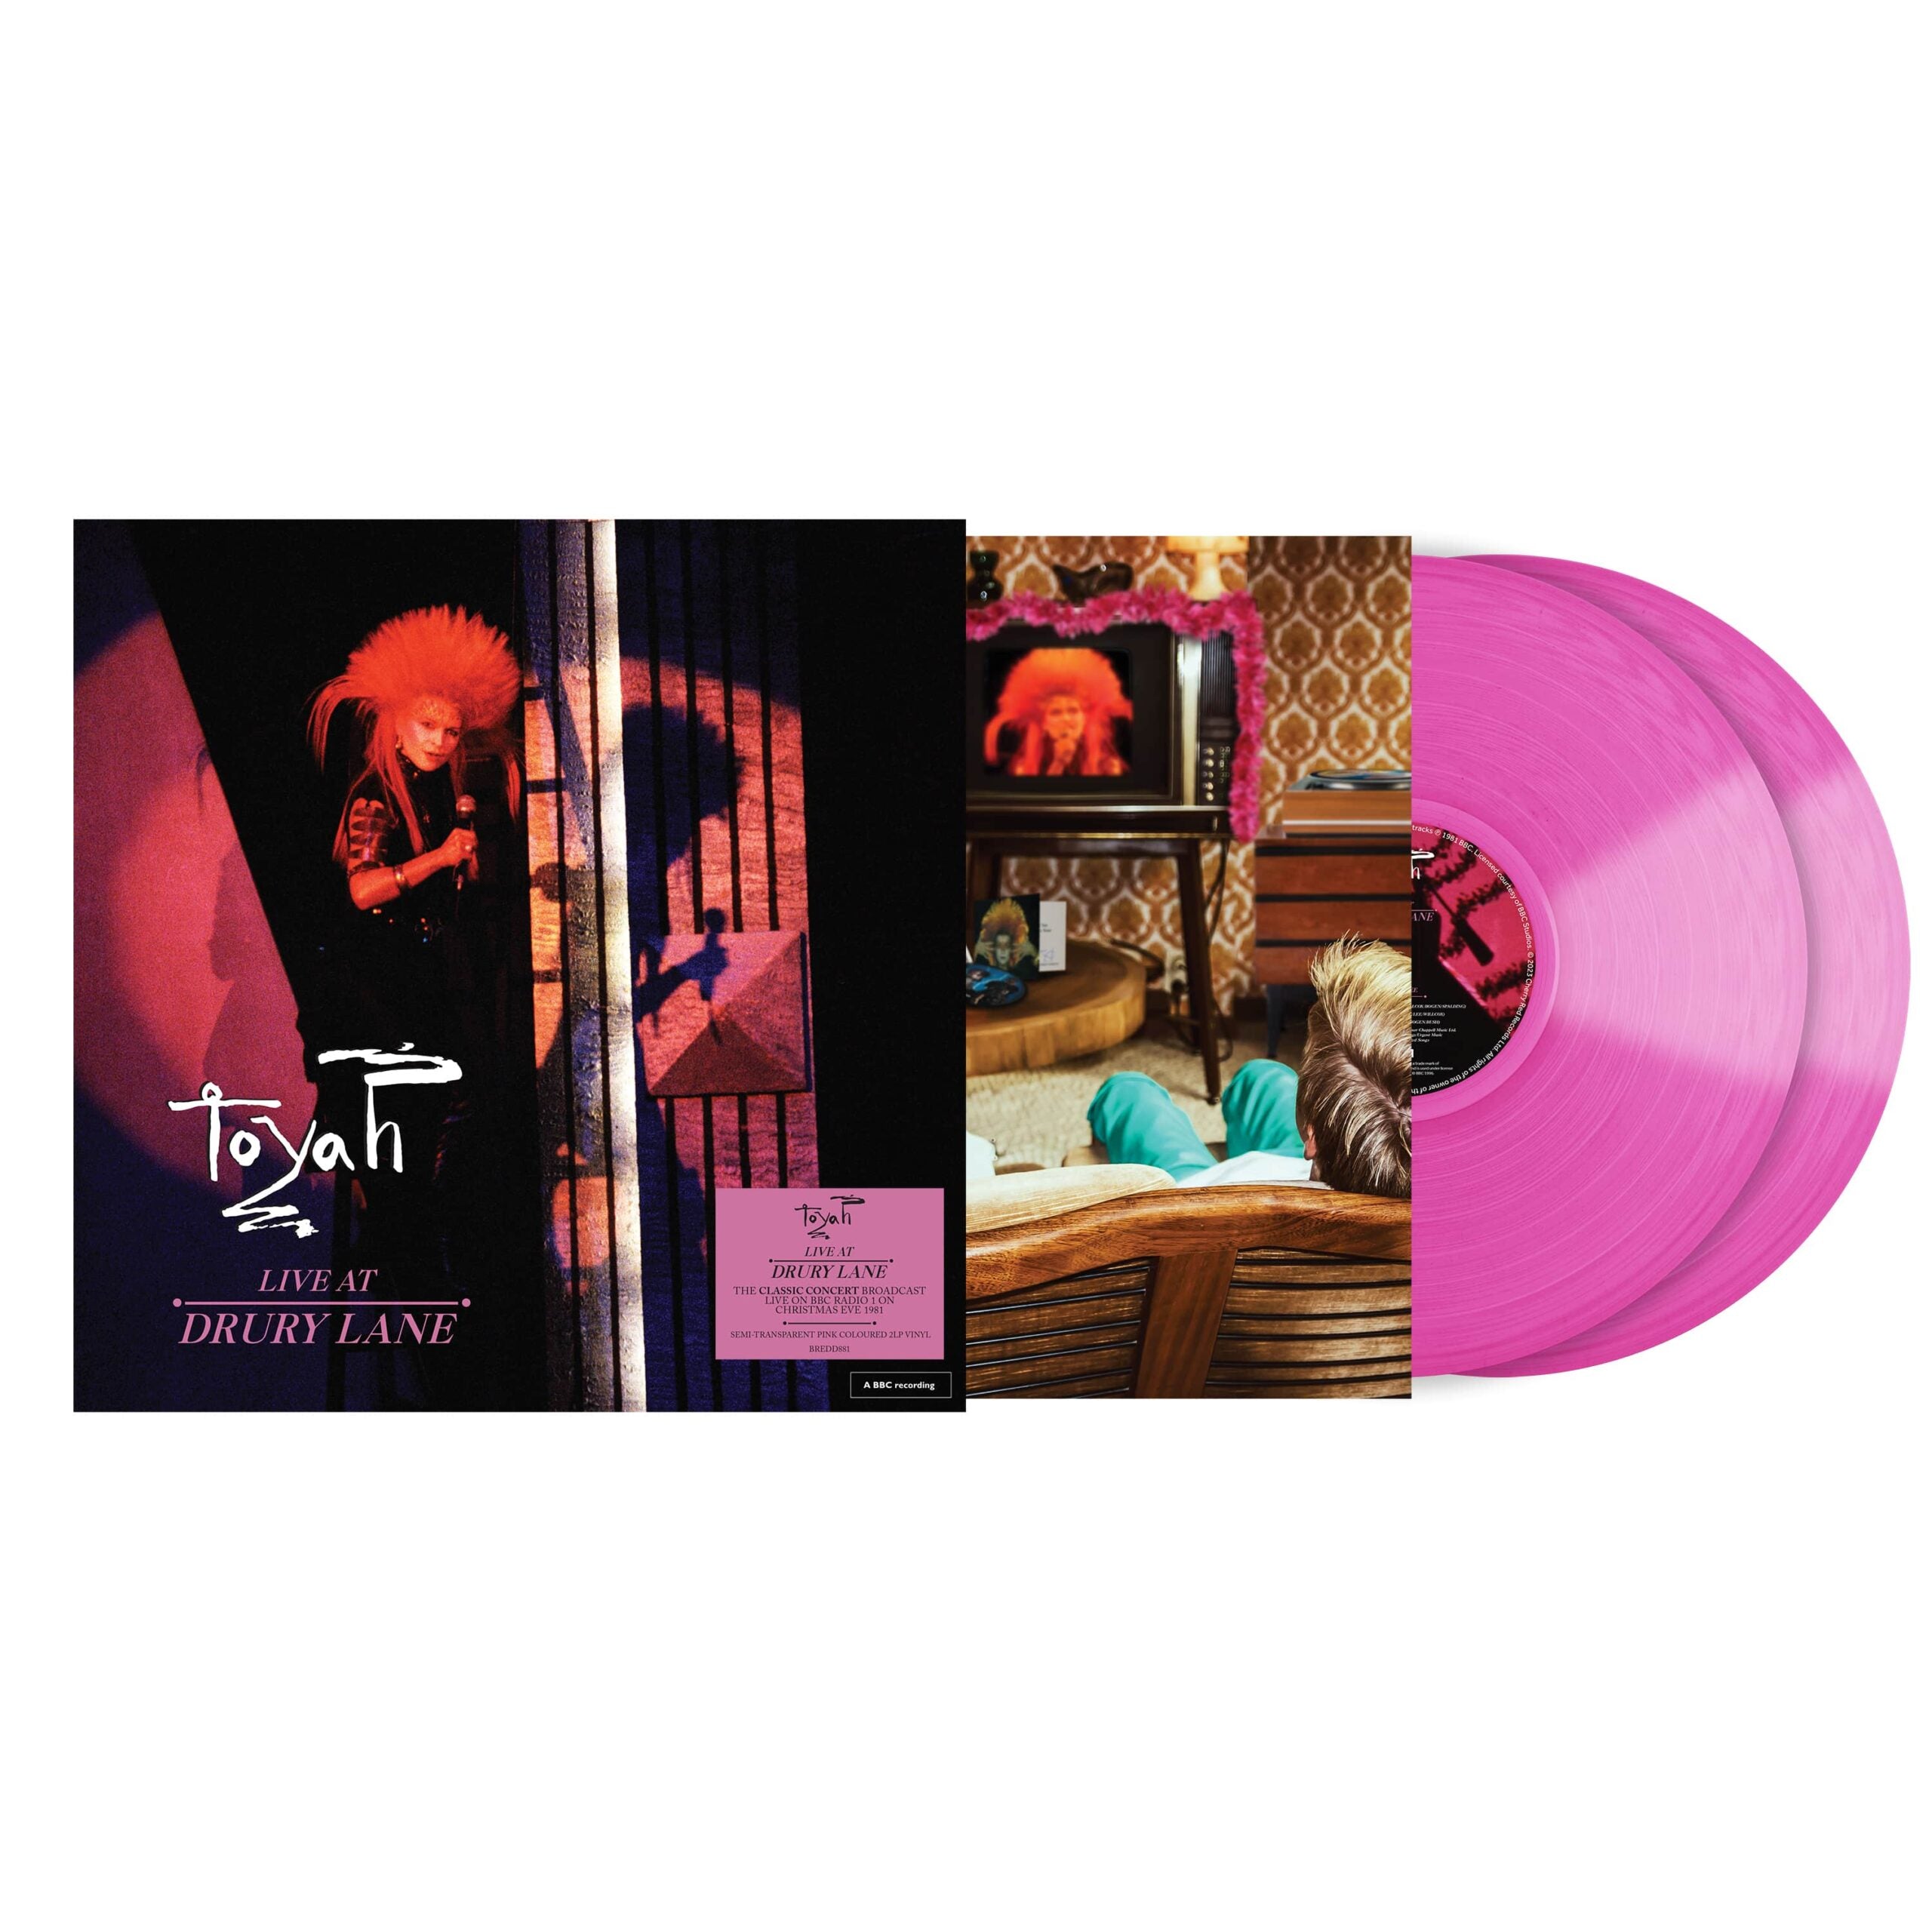 Live At Drury Lane: Semi-Transparent Pink Vinyl 2LP